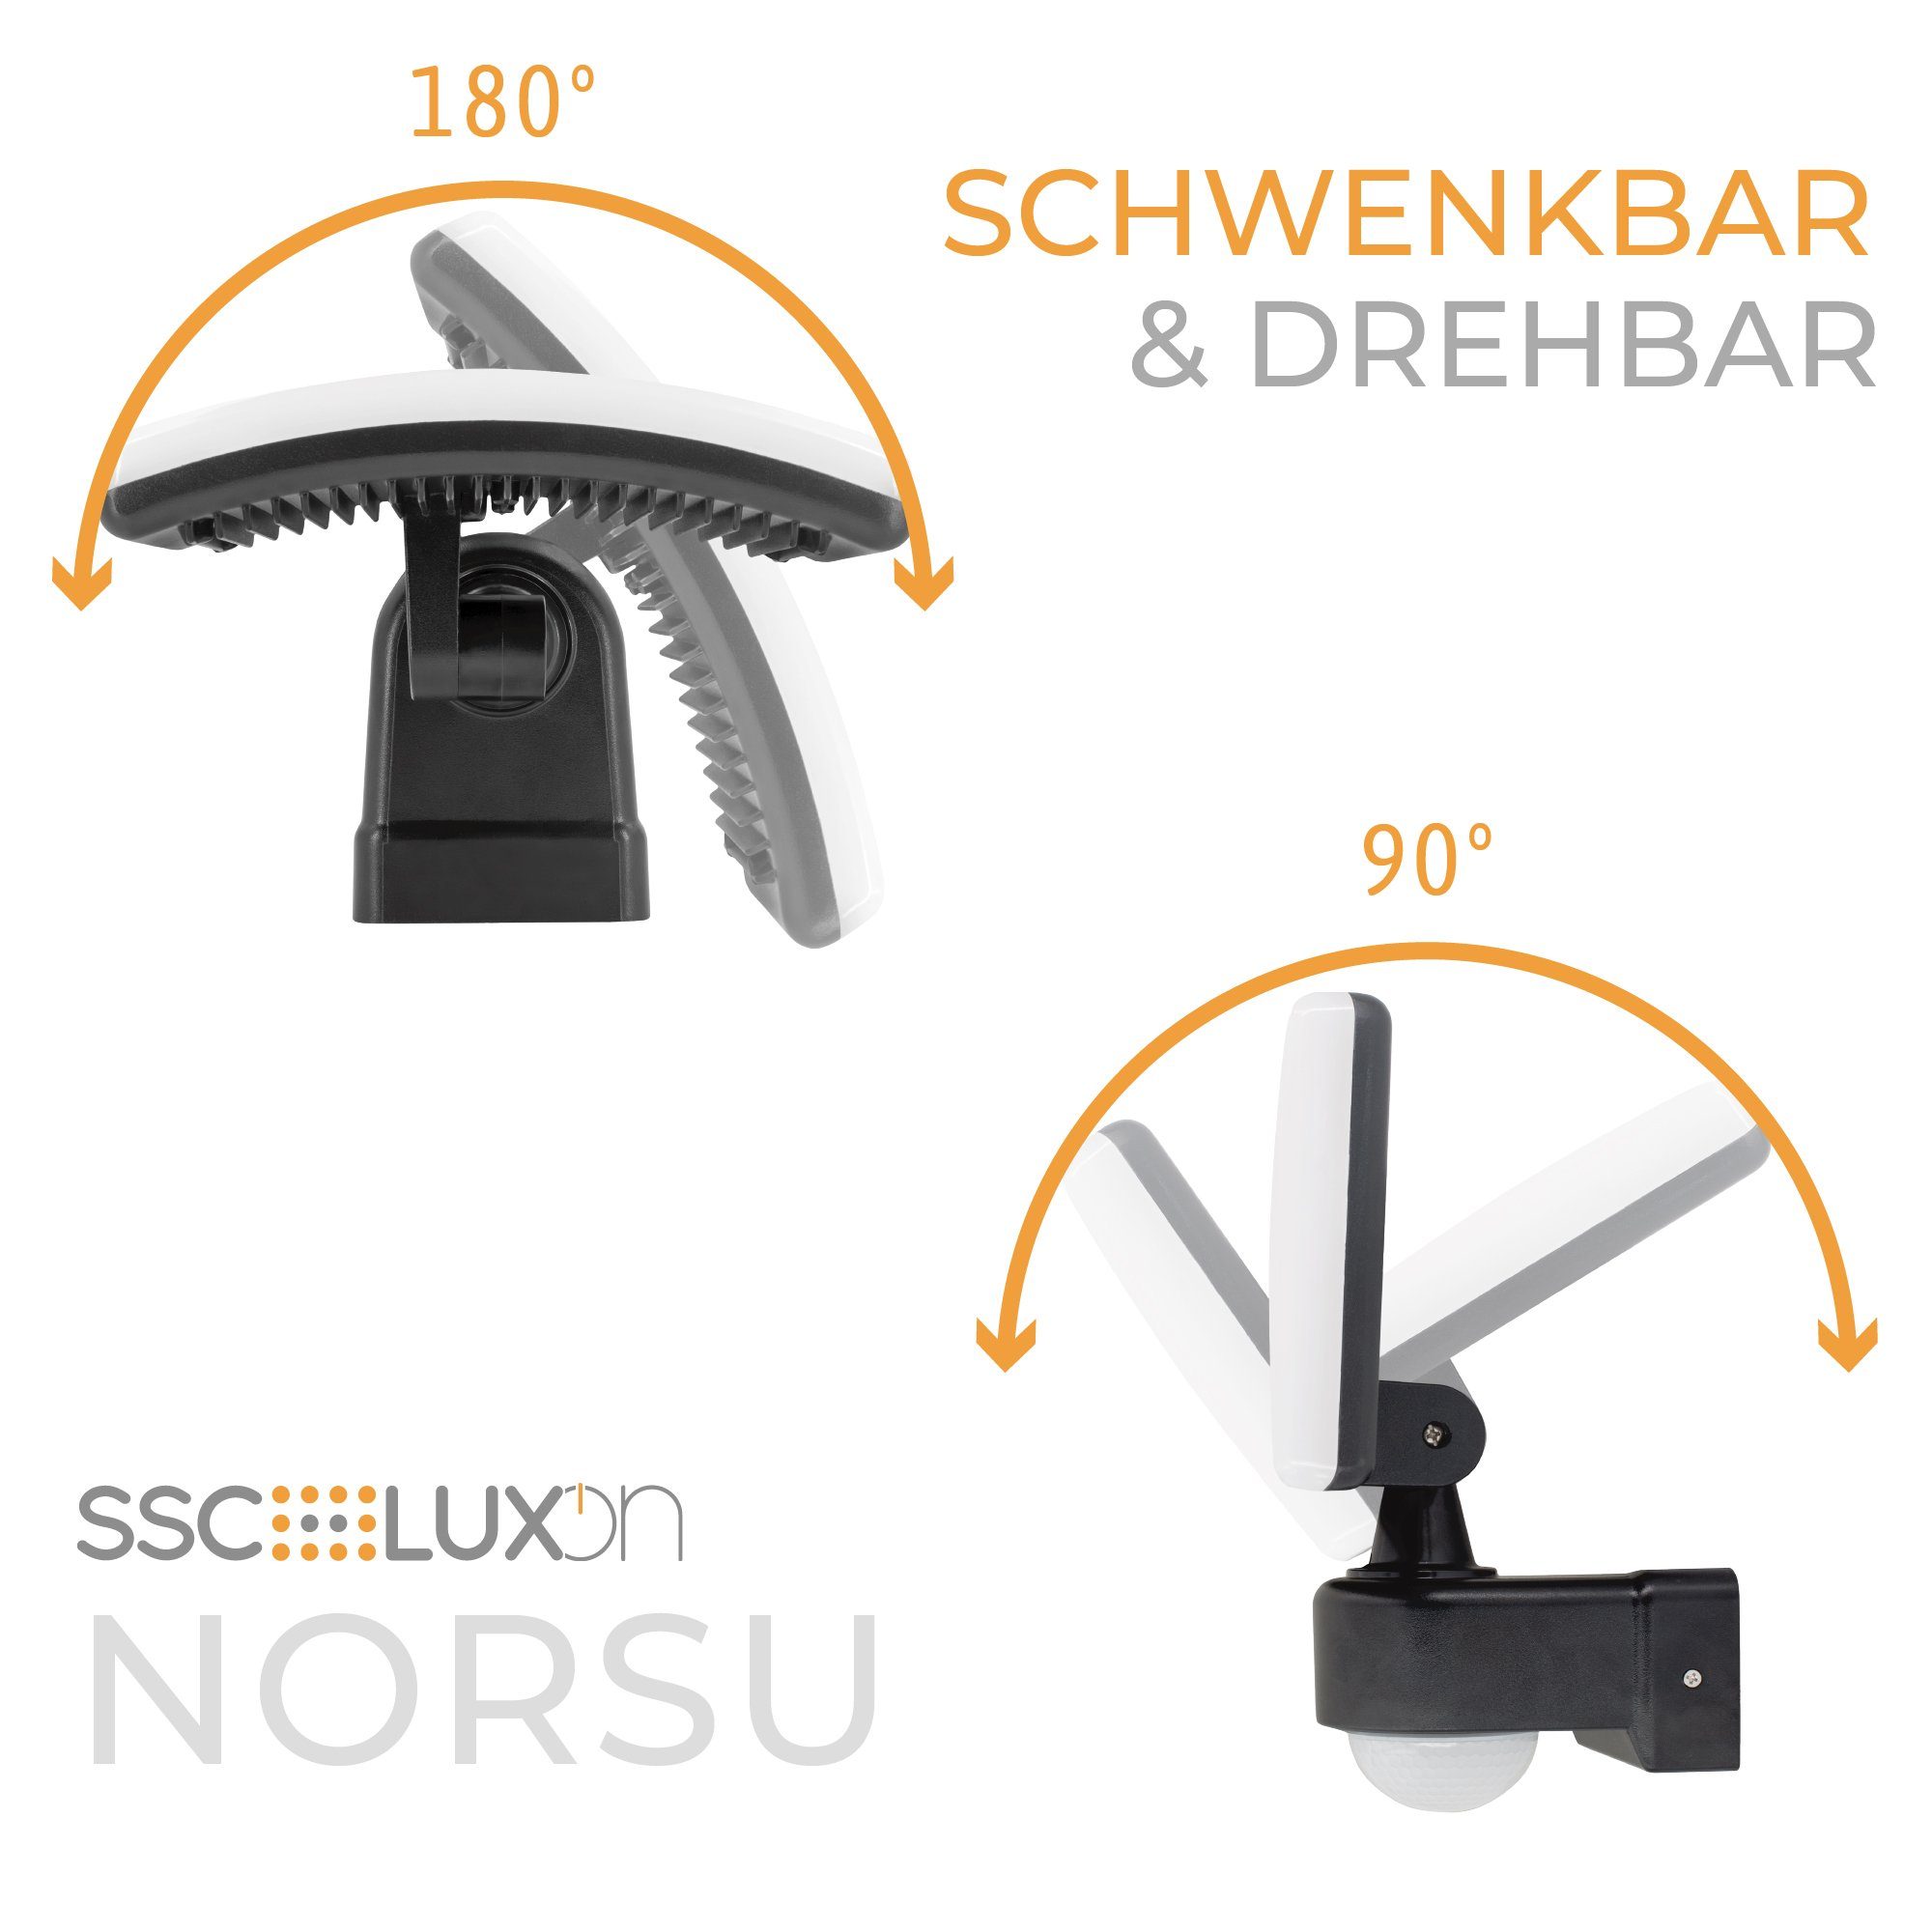 SSC-LUXon LED Neutralweiß schwenkbar 230V, LED Aufbaustrahler & NORSU Bewegungsmelder hell 29W Wand Außenlampe